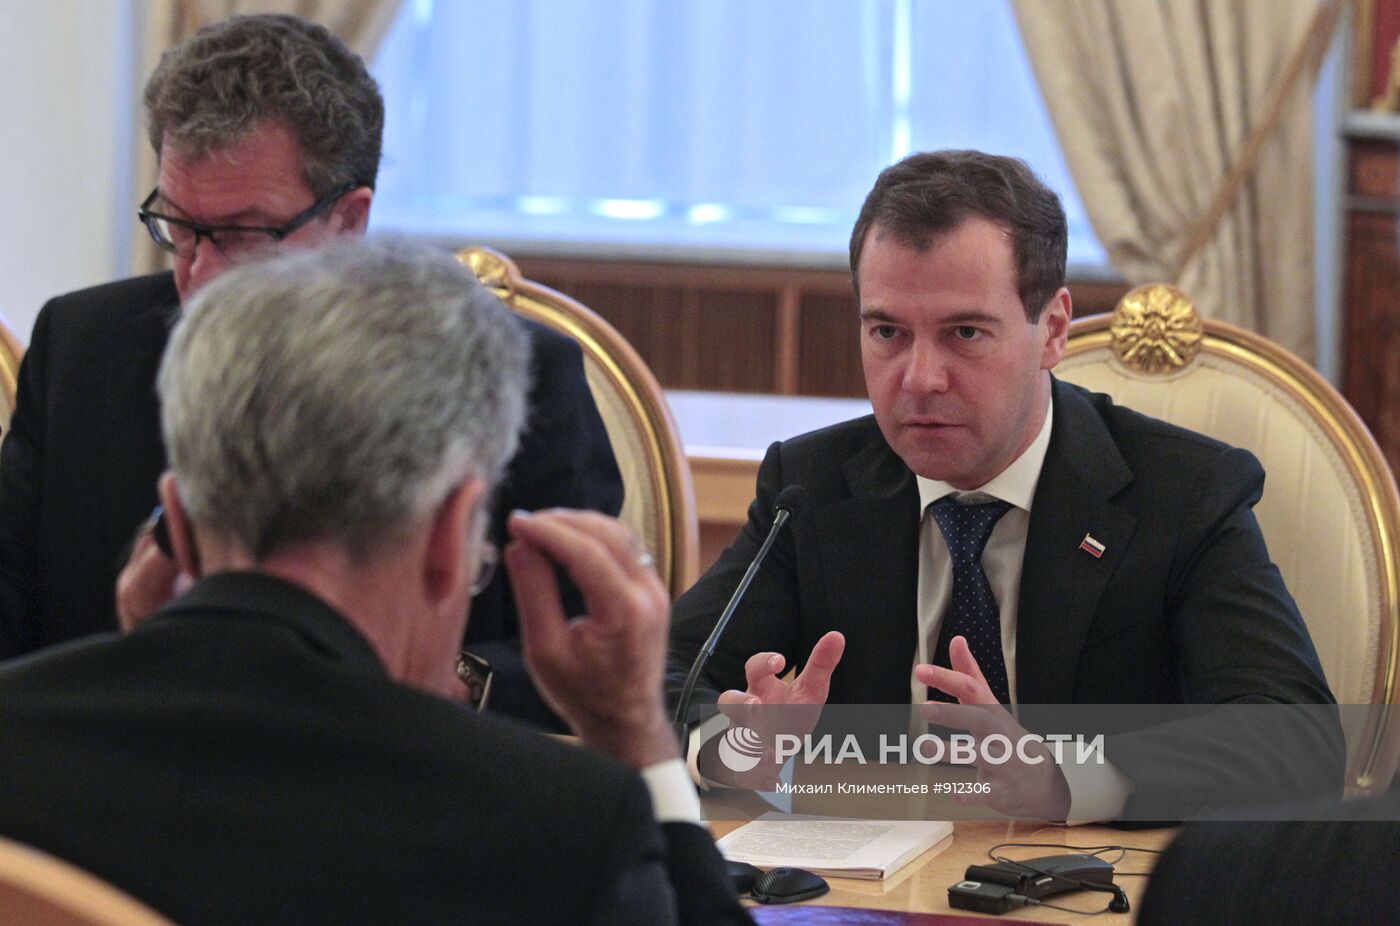 Д.Медведев встретился с Х.Фишером